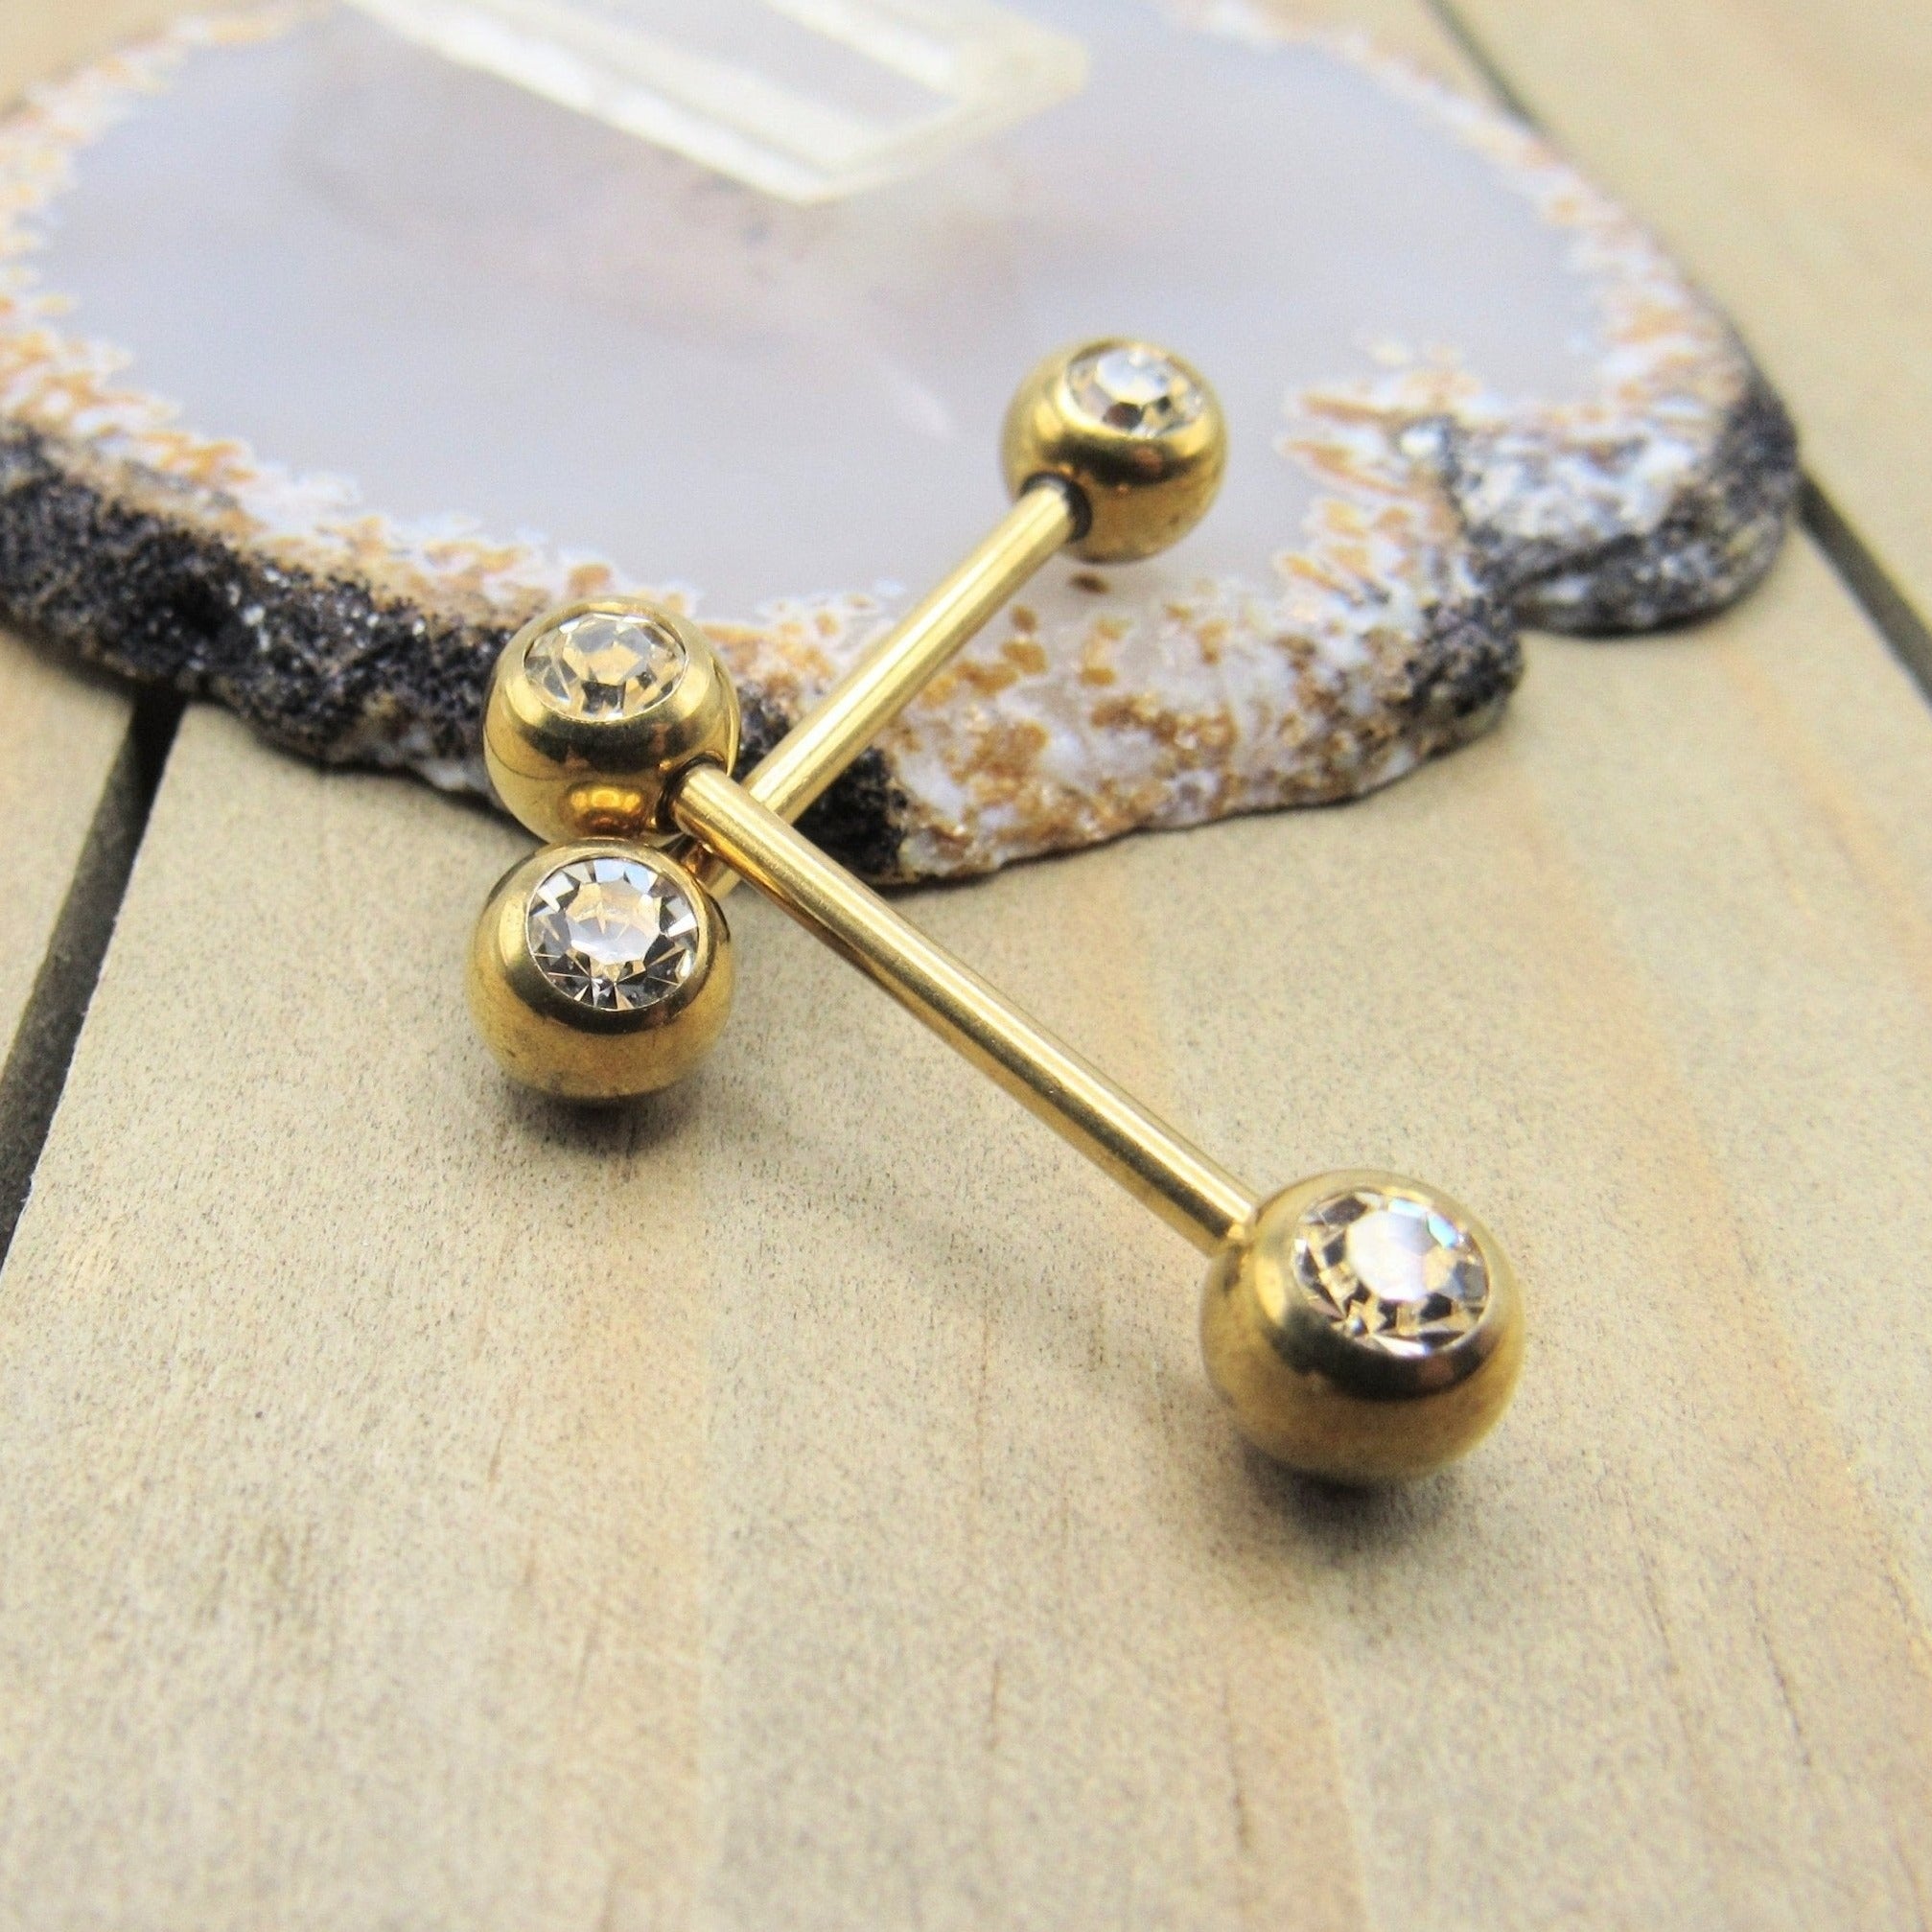 Healing Crystal Gold Nipple Ring - 1 pc – High Pass Body Jewelry